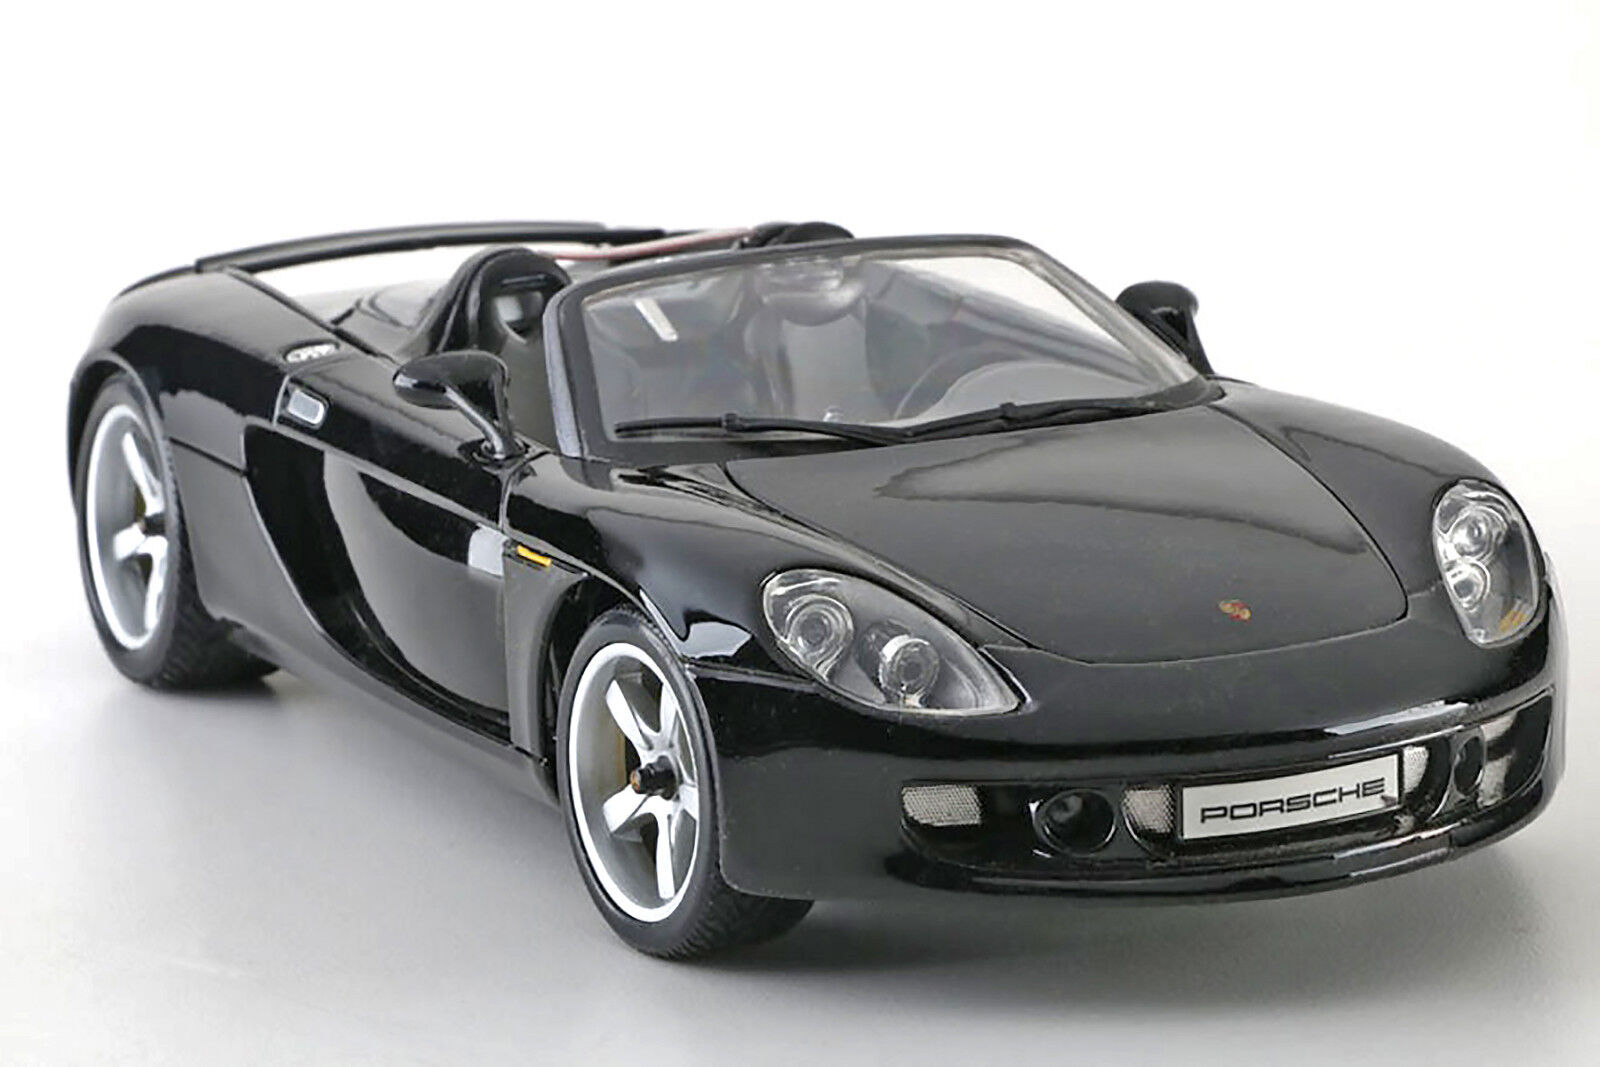 06 Porsche Carerra Gt Coupe Black (maisto Premiere) 1:18 Die Cast-no Box